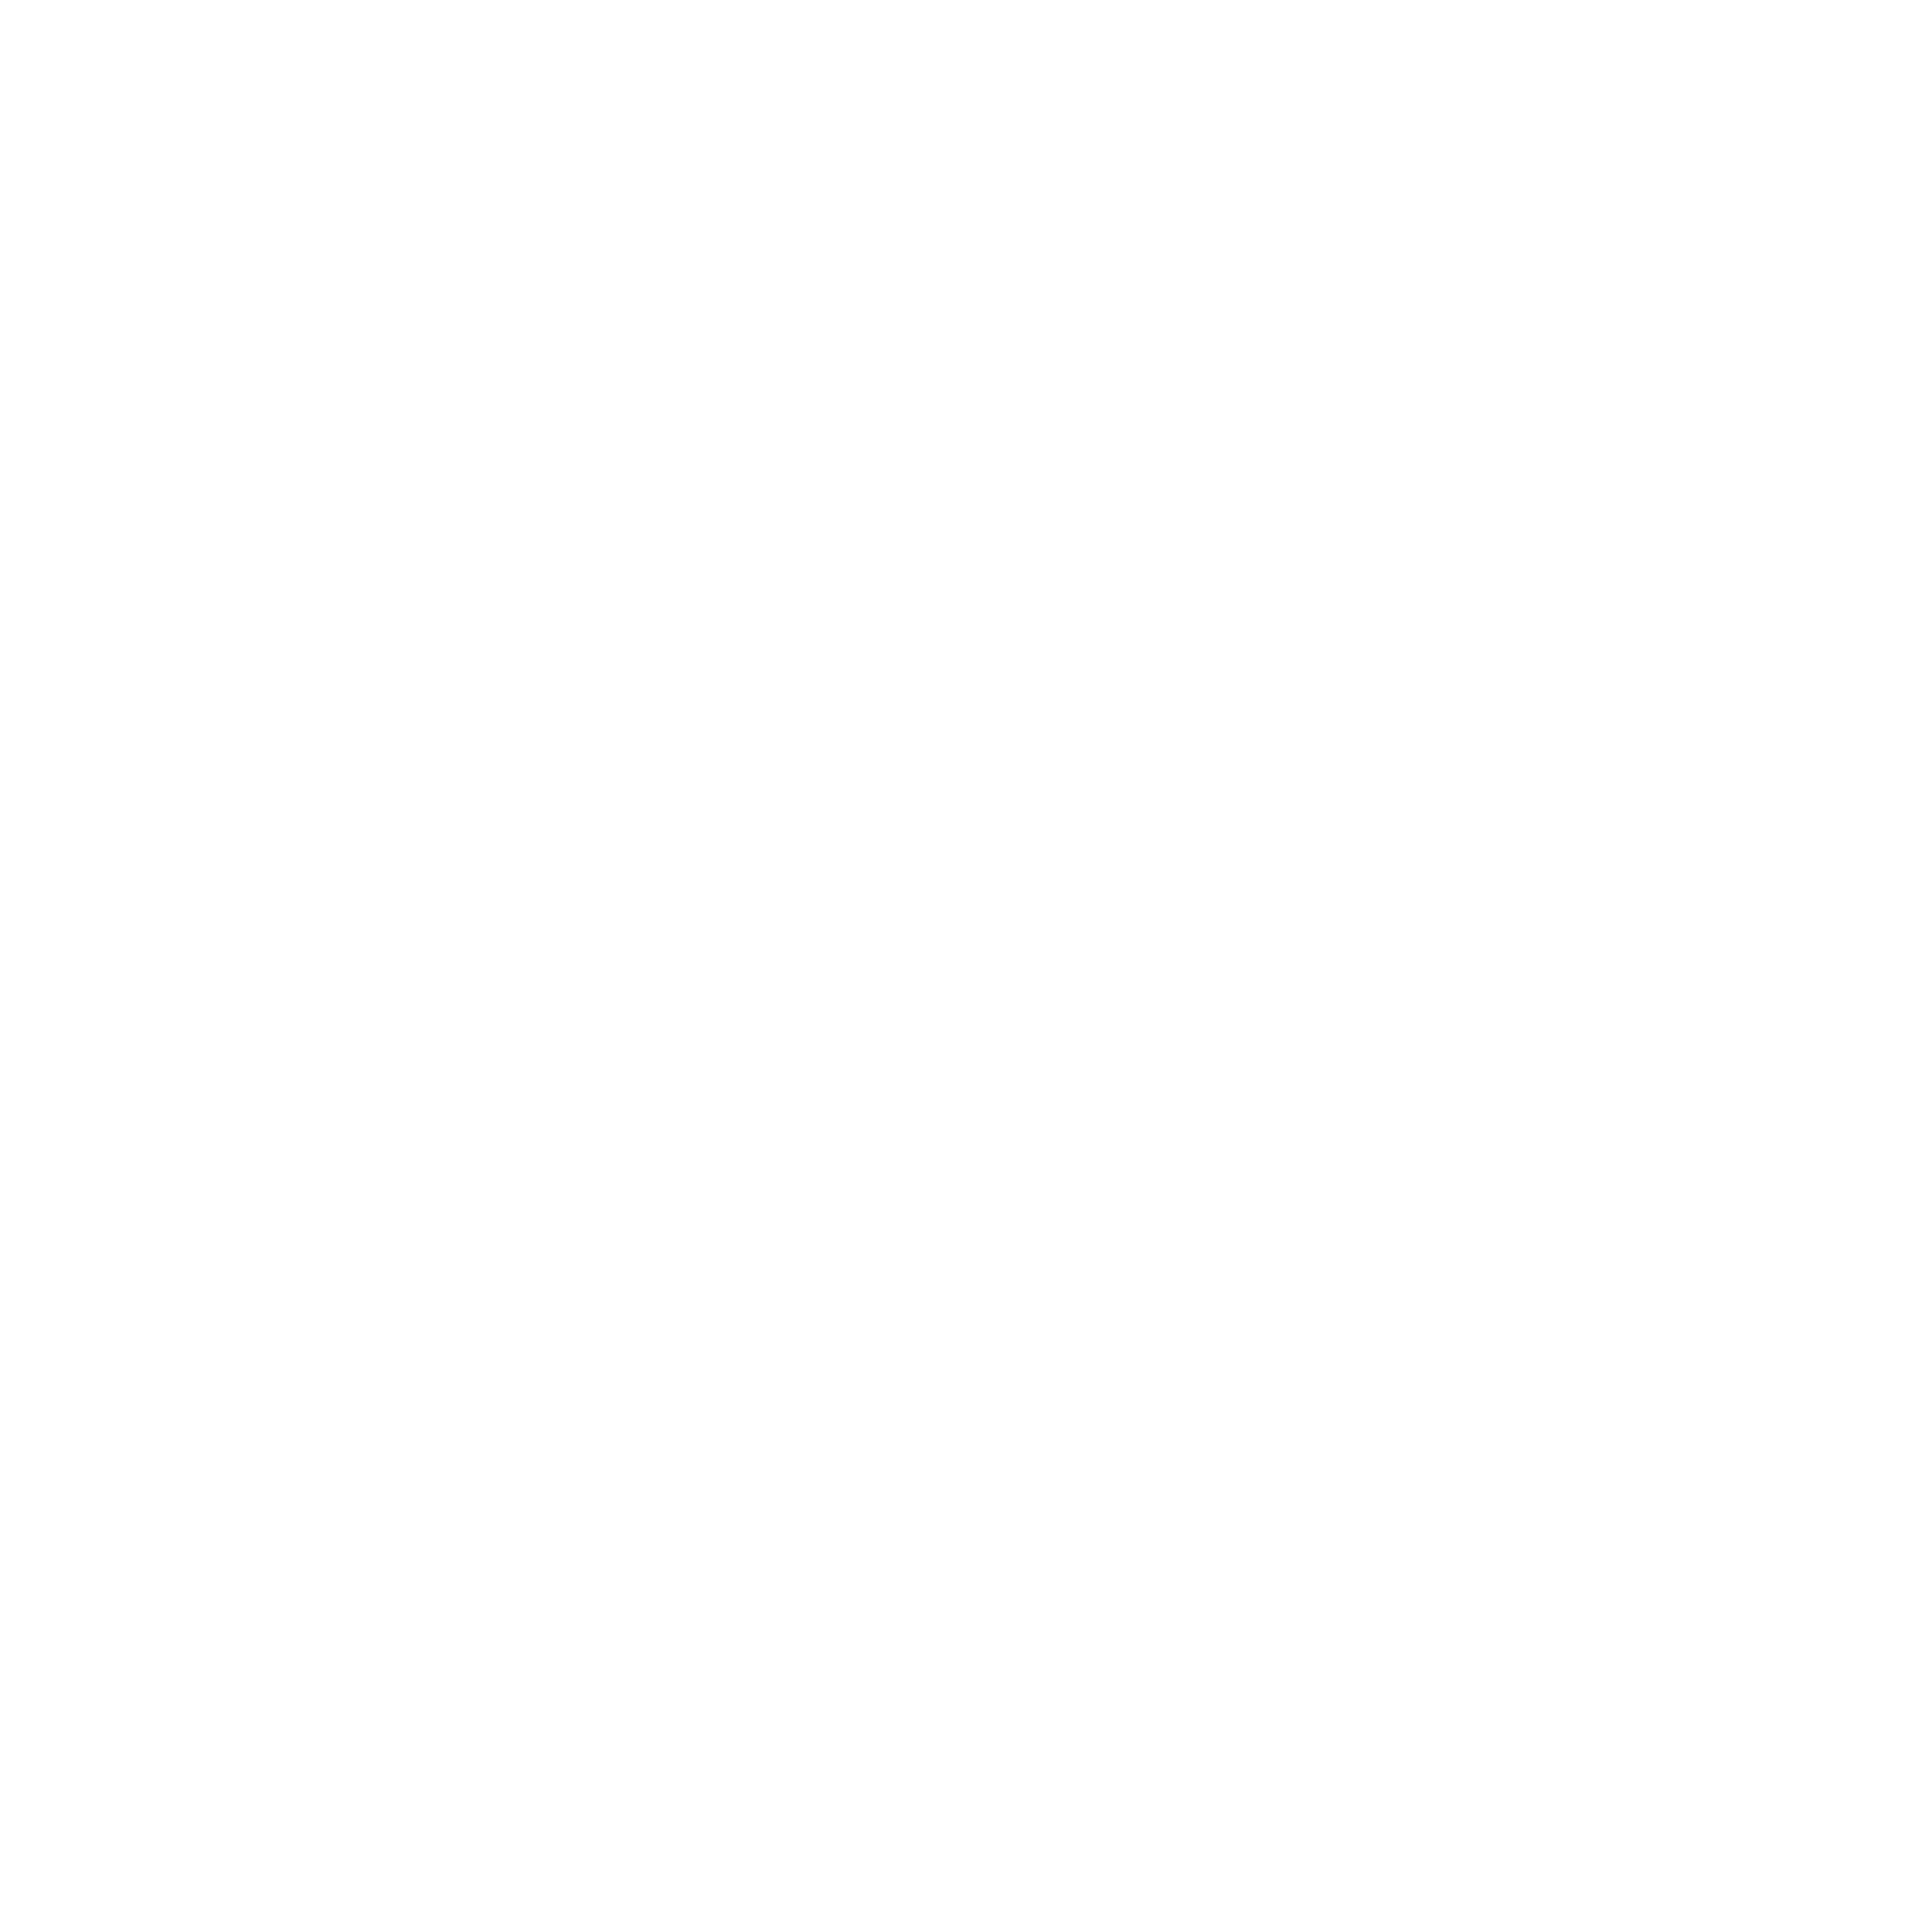 Neutrogena Logo - Neutrogena Logo PNG Transparent & SVG Vector - Freebie Supply